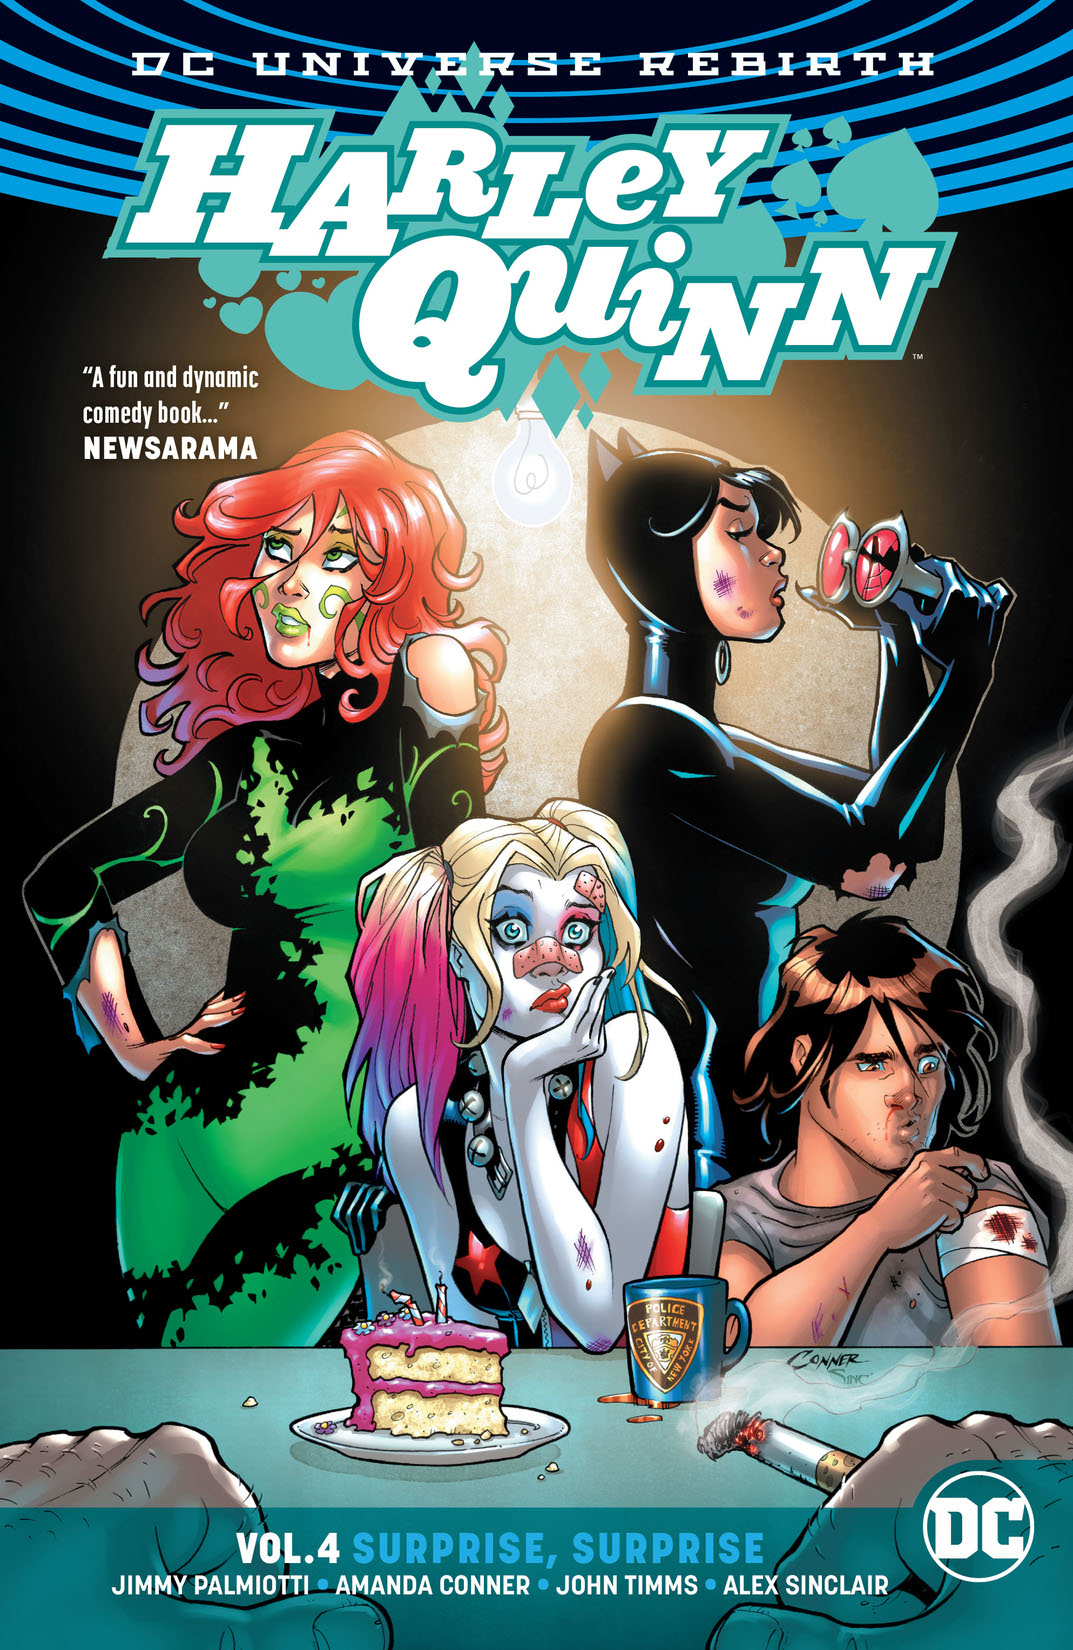 Harley Quinn Vol. 4: Surprise, Surprise (Rebirth) preview images